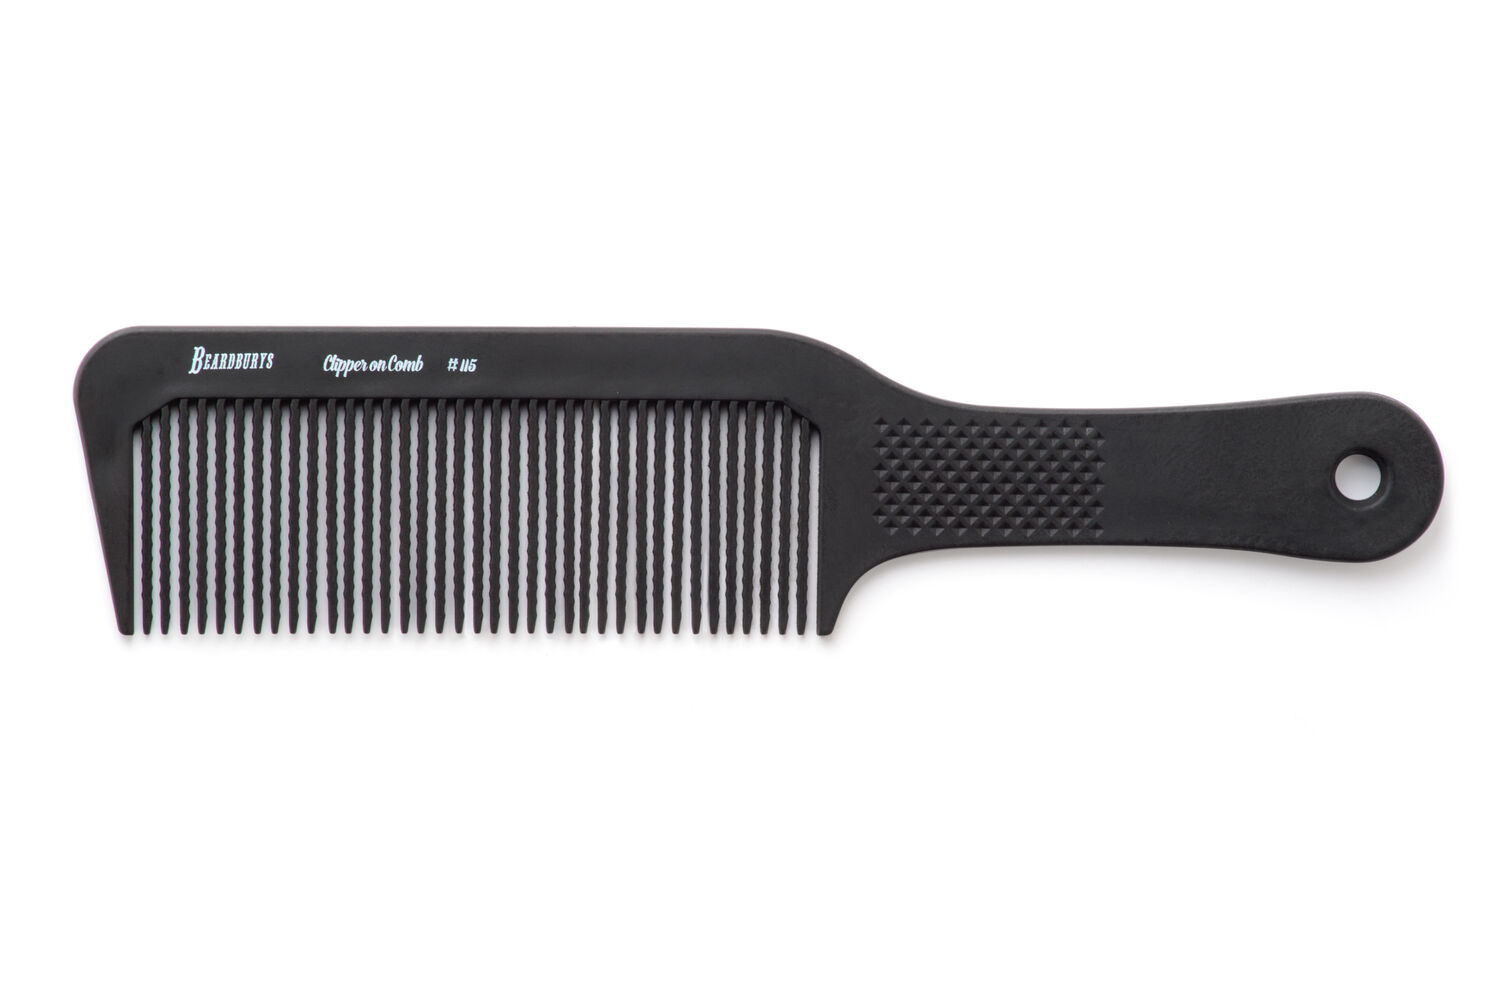 Barber hřeben Beardburys (clipper comb)